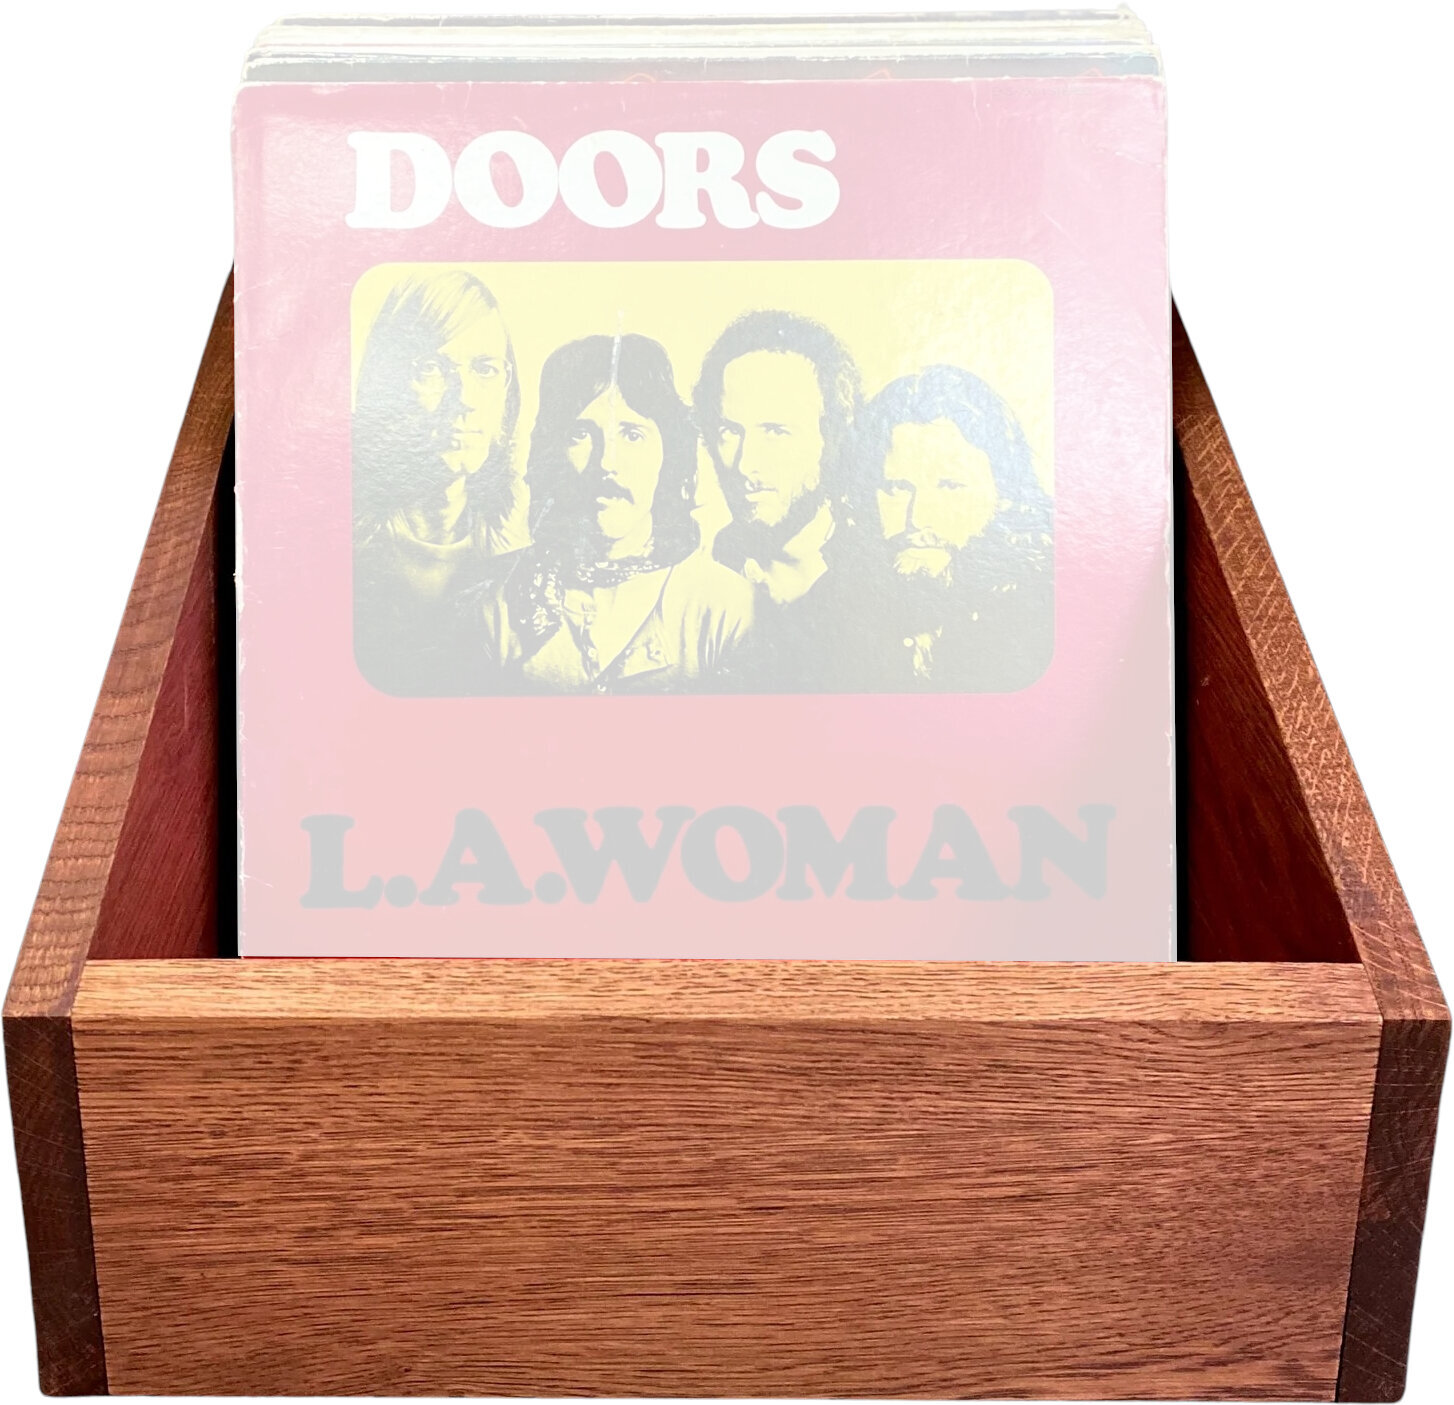 Boîte pour disques LP Music Box Designs A Vulgar Display of Vinyl - 12 Inch Vinyl Storage Box, Whole Lotta Rosewood La boîte Boîte pour disques LP